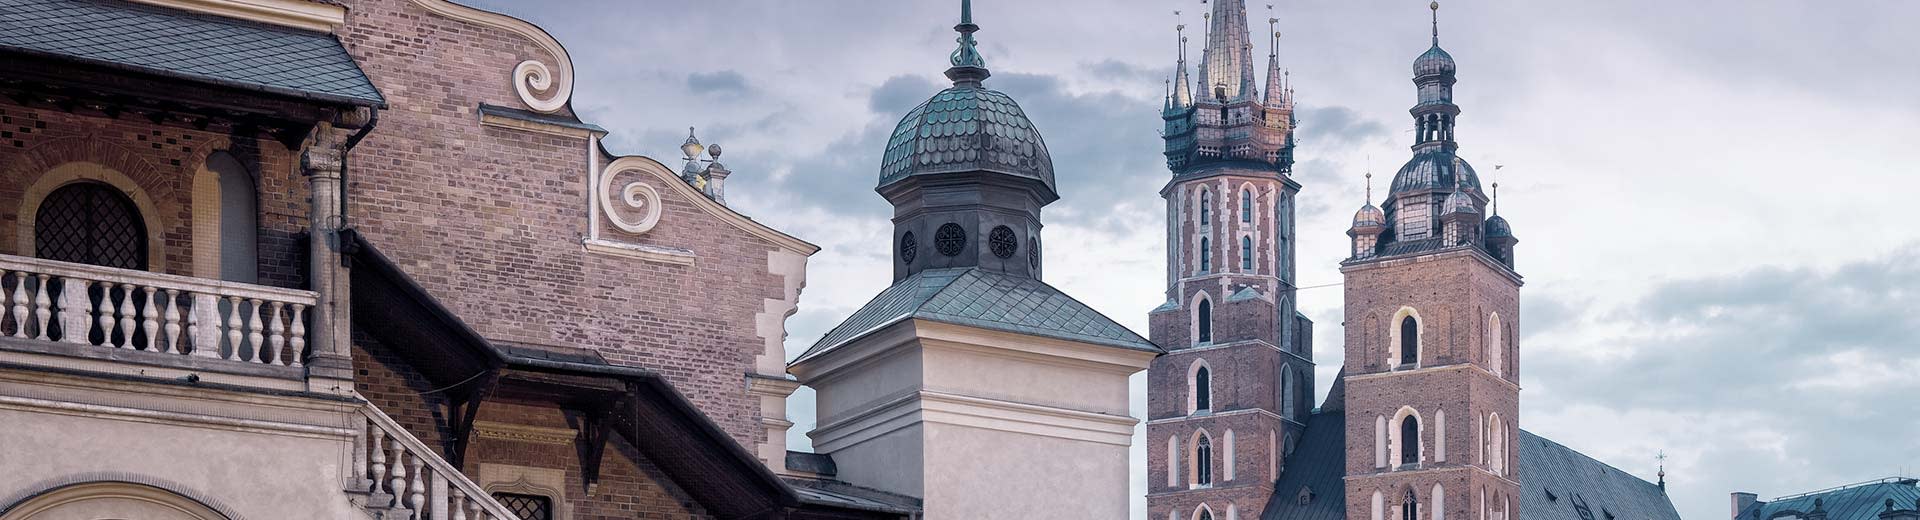 Beautiful Polish churches set against a cloudy sky in Krakow.